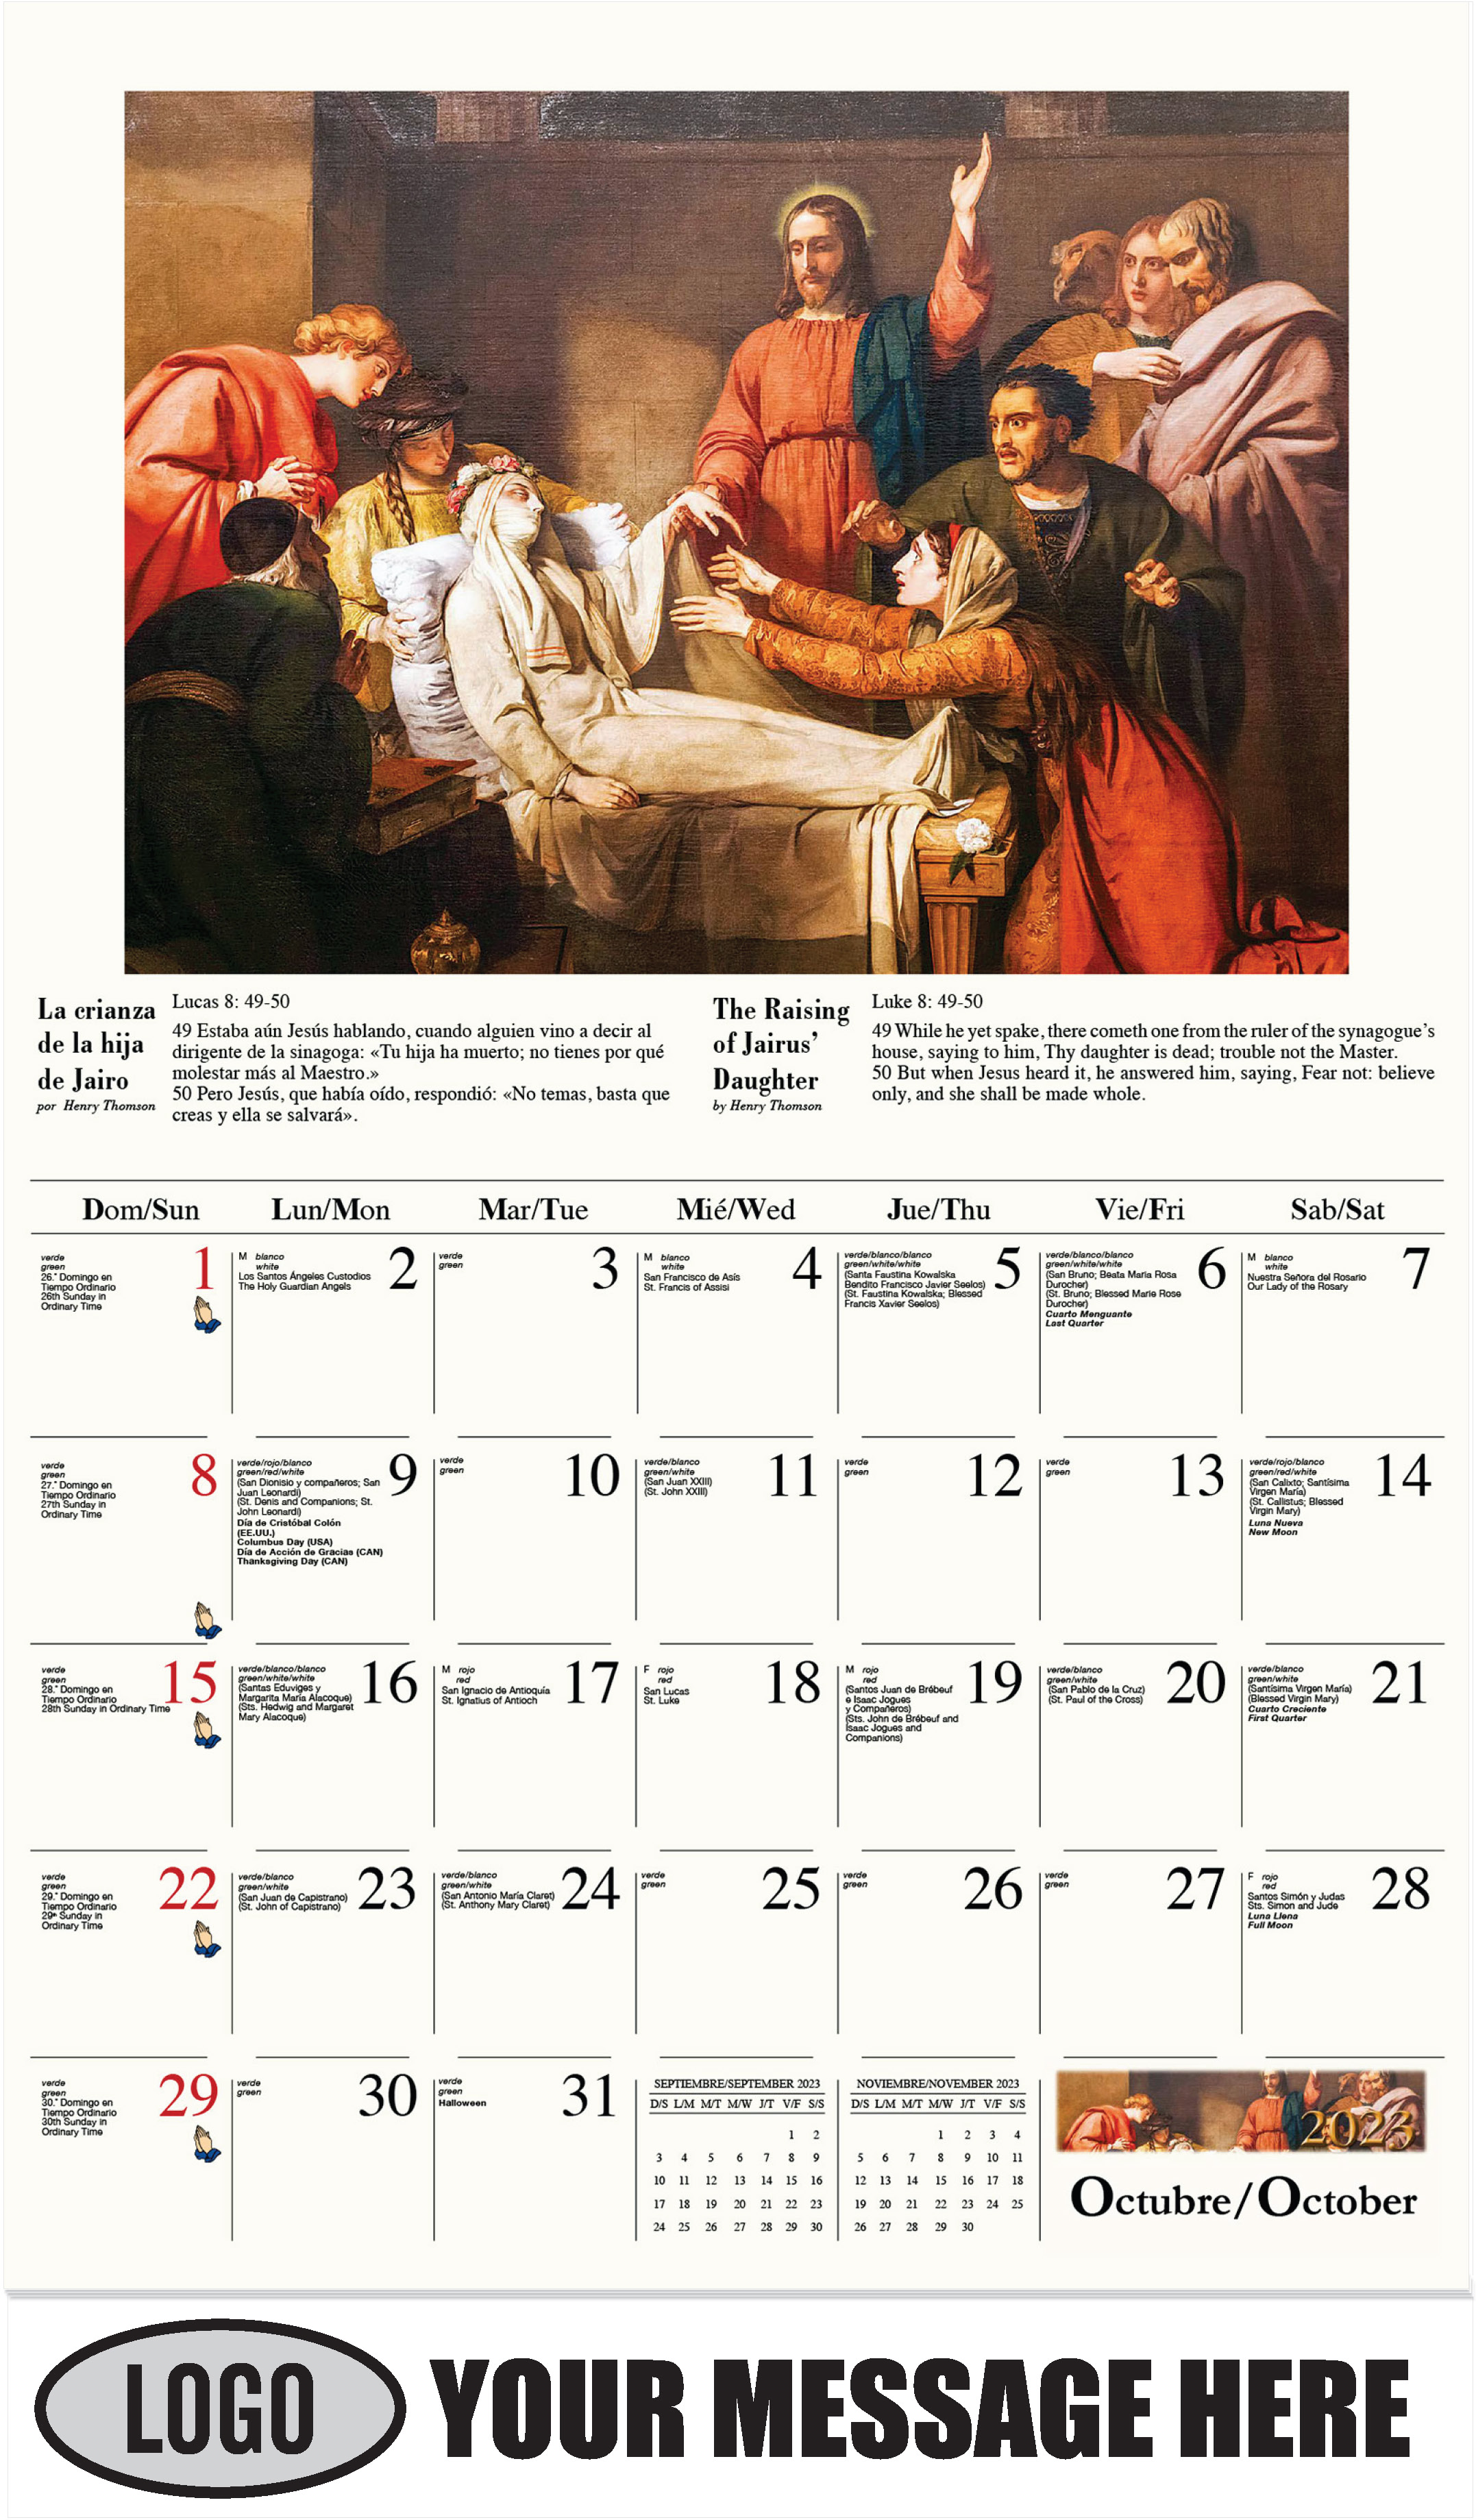 La crianza de la hija de Jairo por Henry Thompson - October - Catholic Inspiration (Spanish-English bilingual) 2023 Promotional Calendar